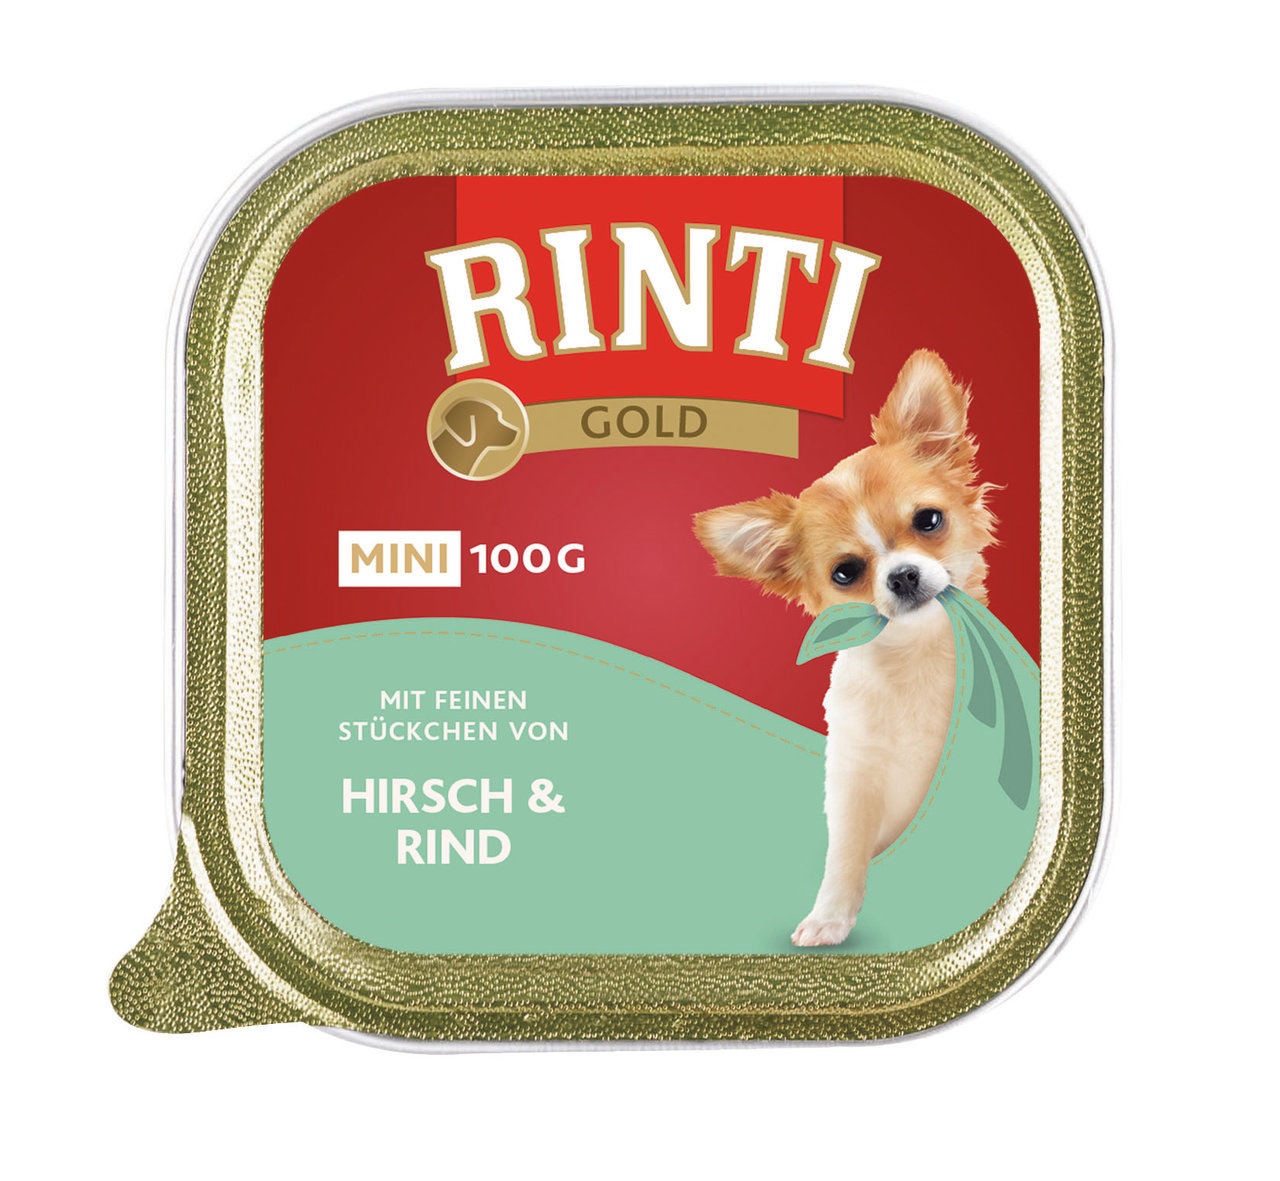 RINTI Gold Mini Hirsch & Rind 100g Schale Hundenassfutter